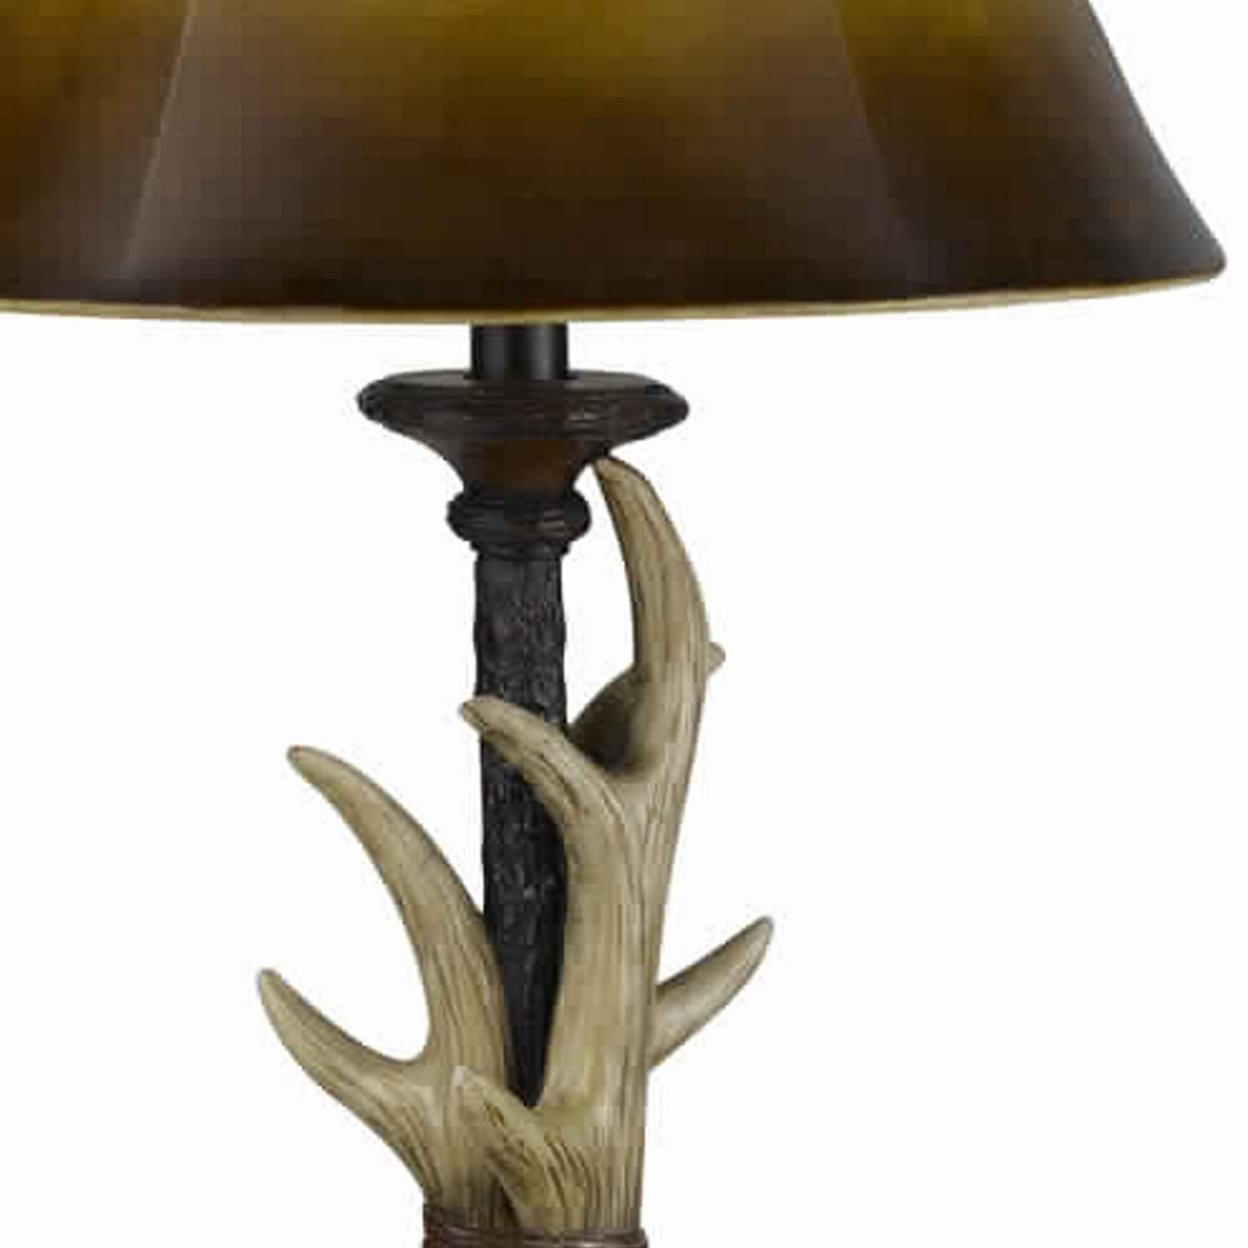 100 Watt Table Lamp With Buckhorn Design Body And Bell Shade, Brown- Saltoro Sherpi